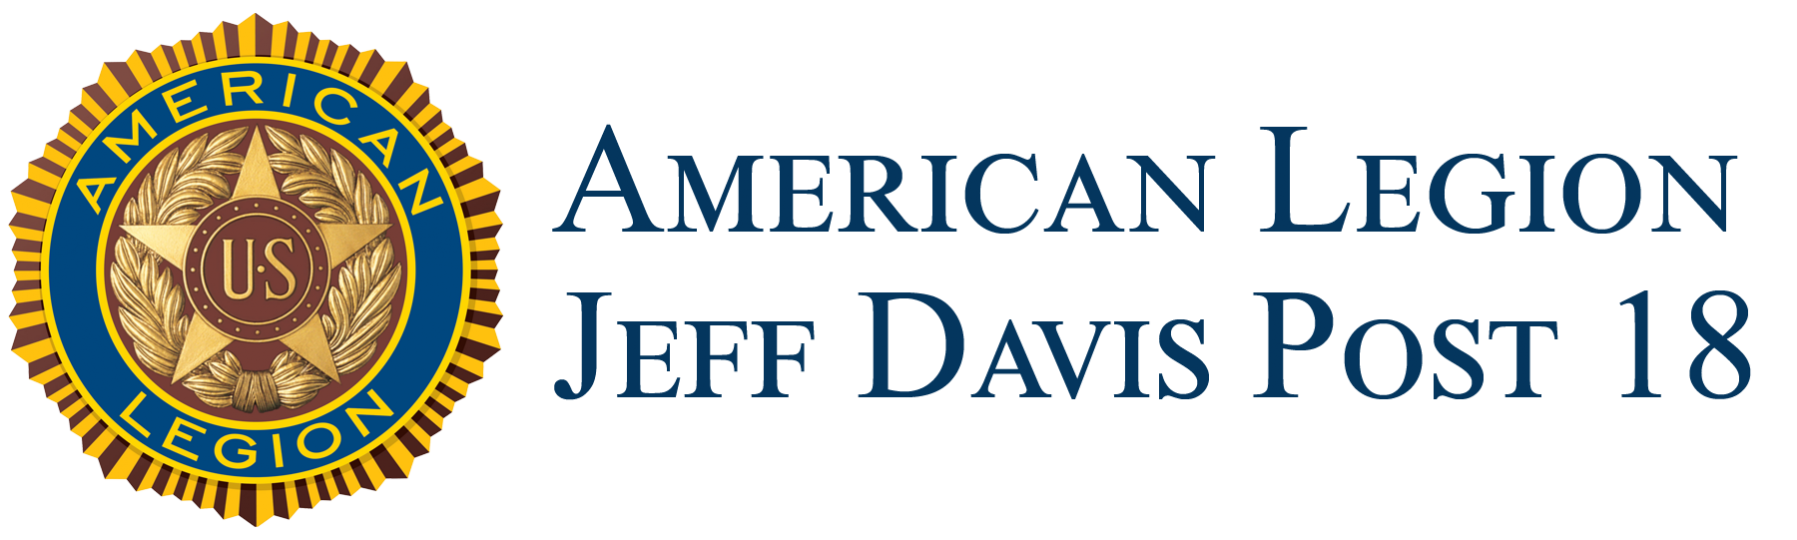 American Legion Jeff Davis Post 18